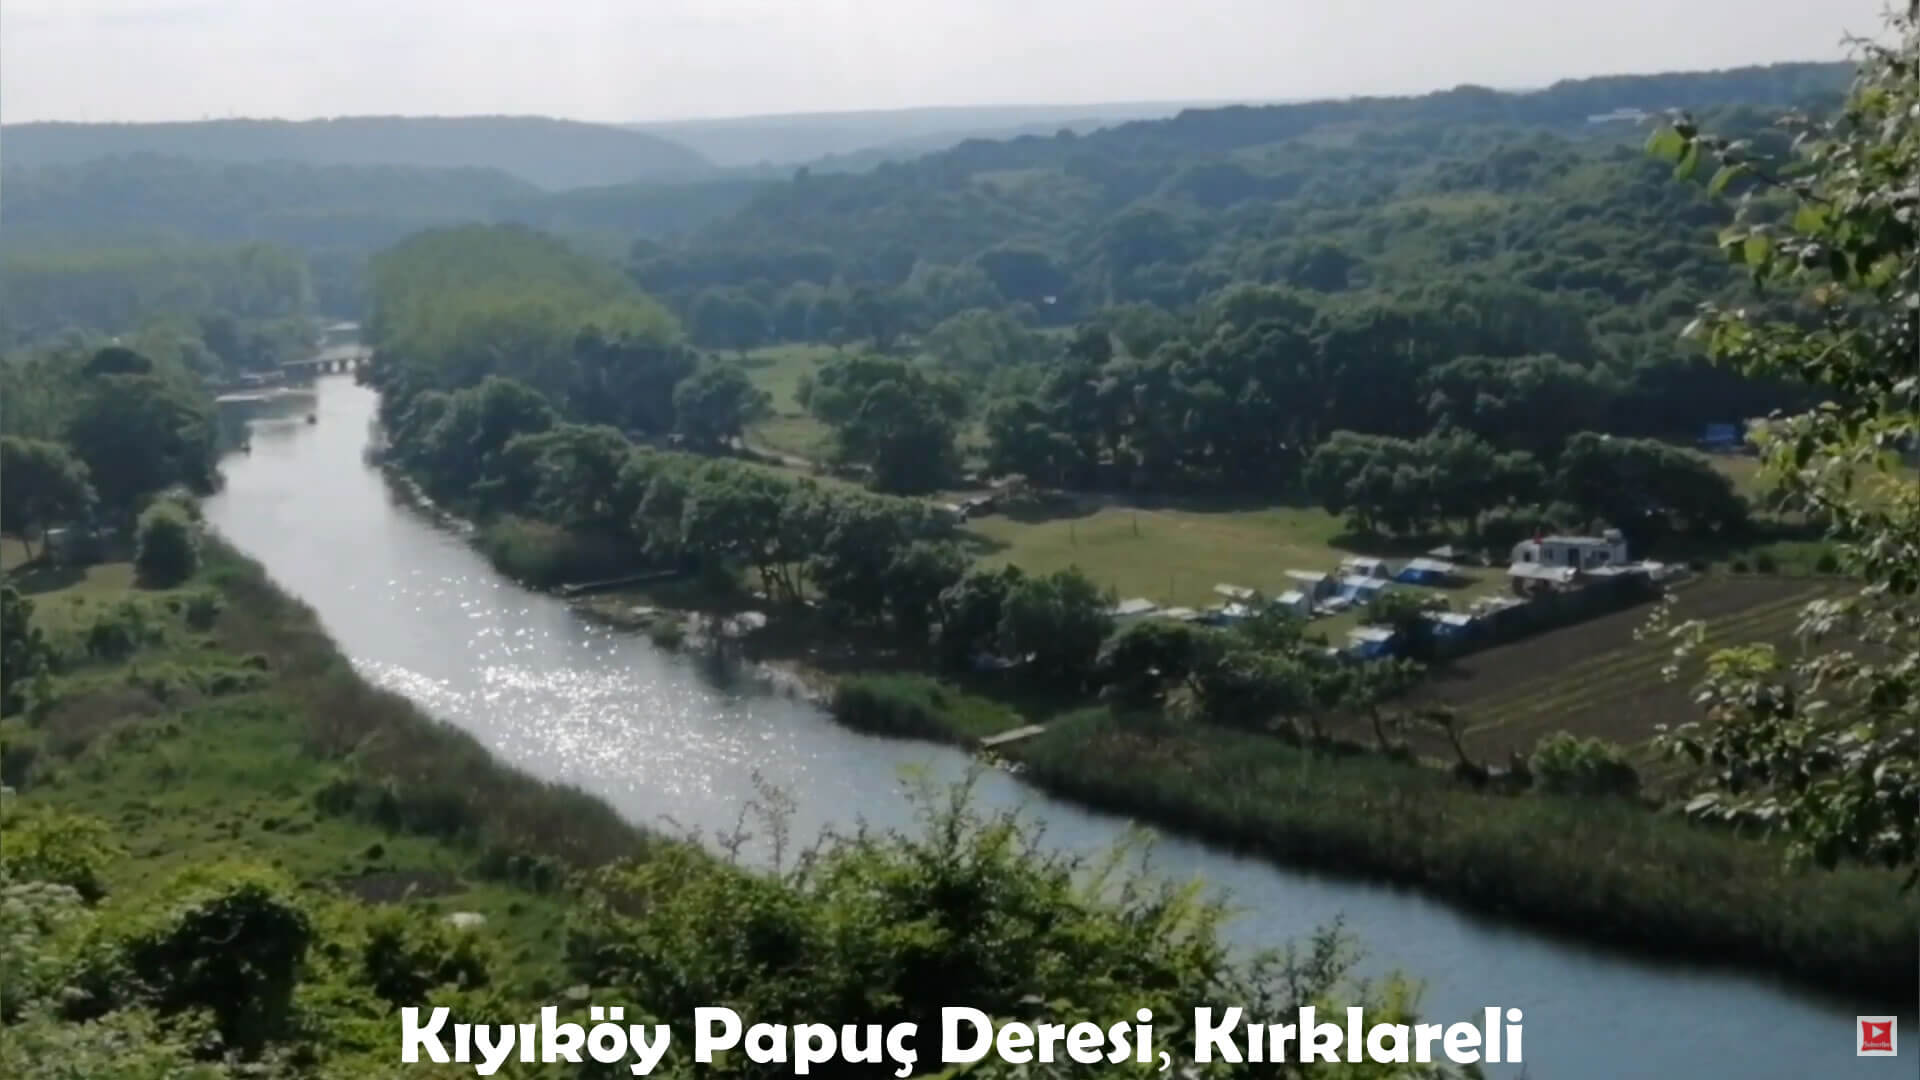 Kiyikoy Papuc Creeki, Kirklareli